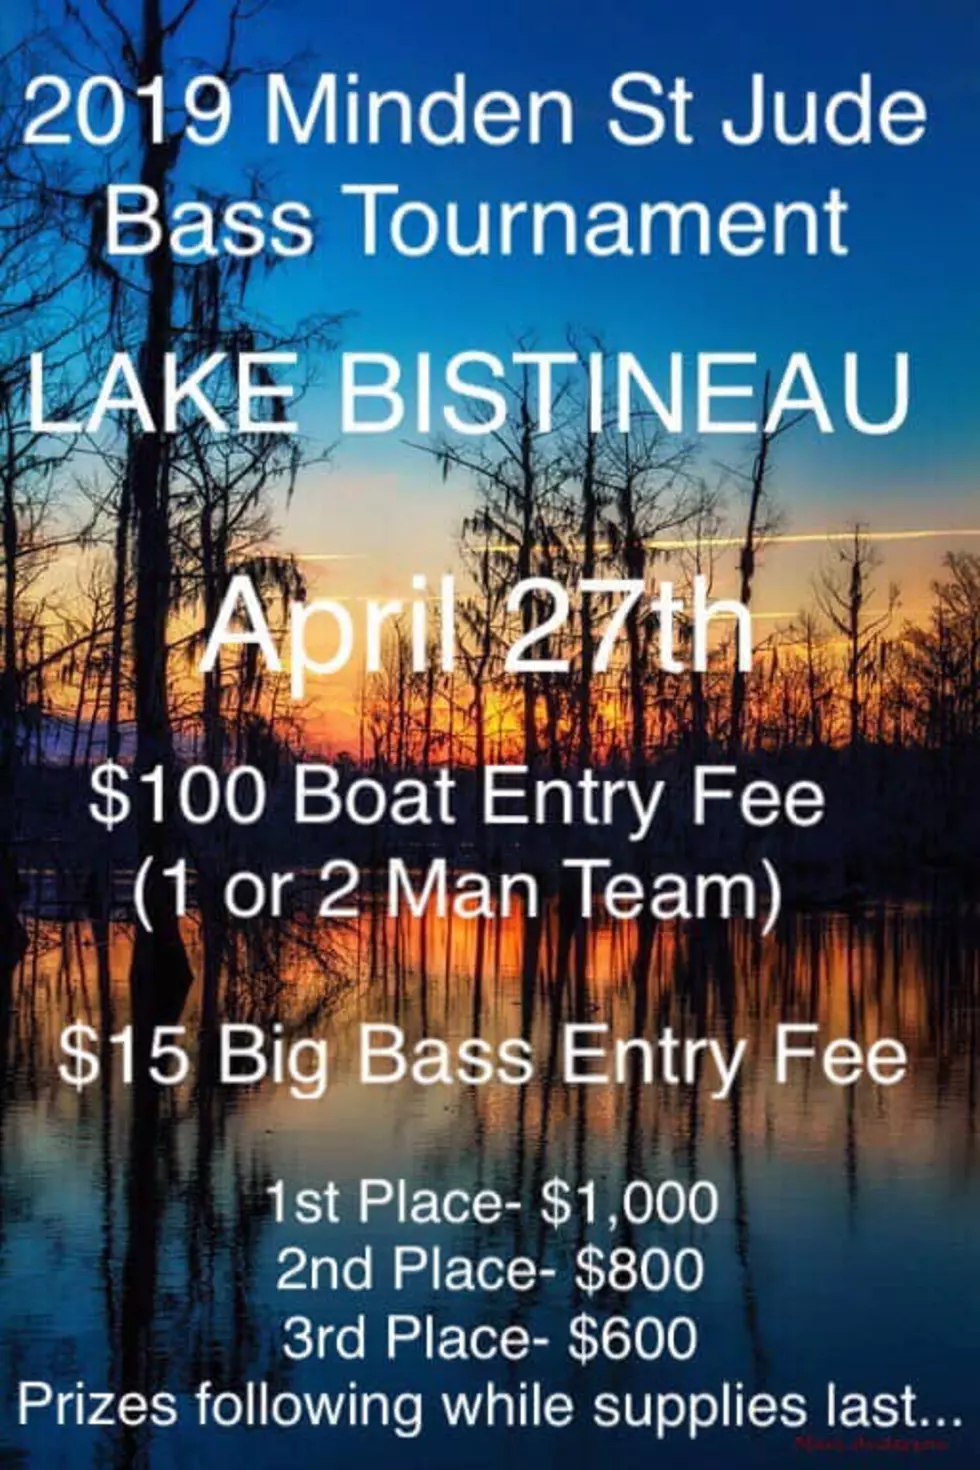 Minden St. Jude Bass Tournament on Lake Bistineau is April 27